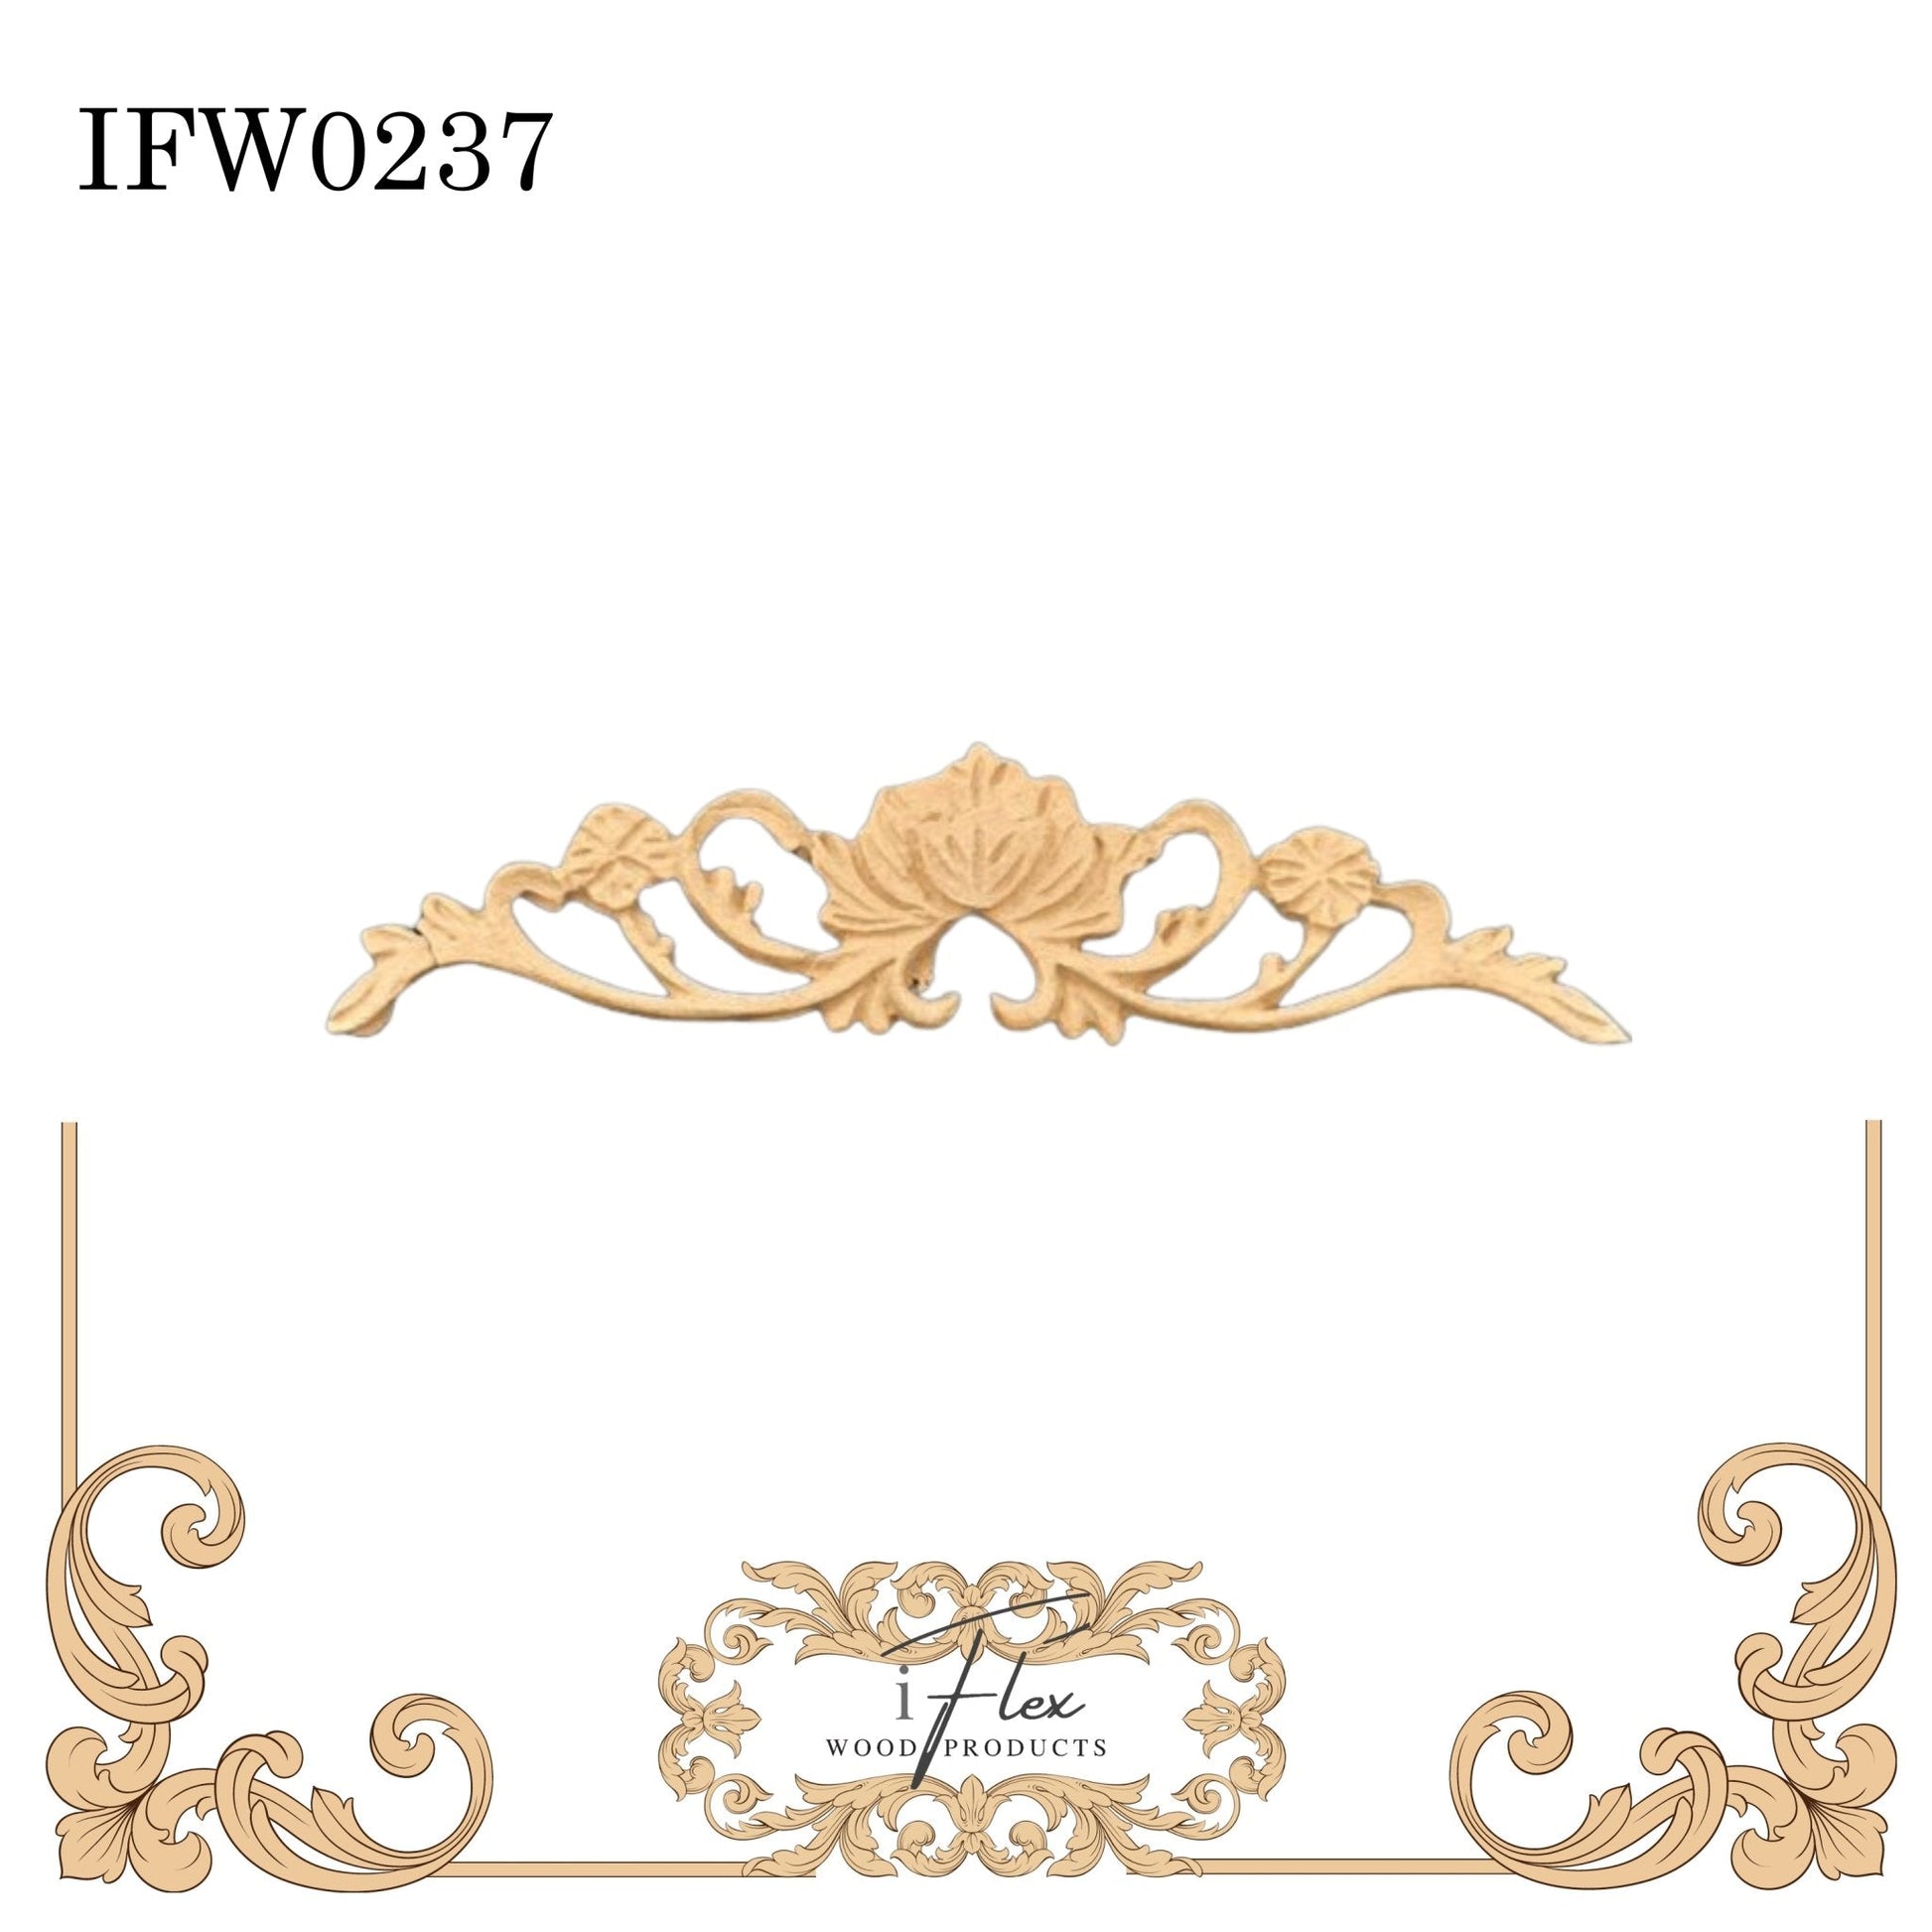 Floral Pediment IFW 0237